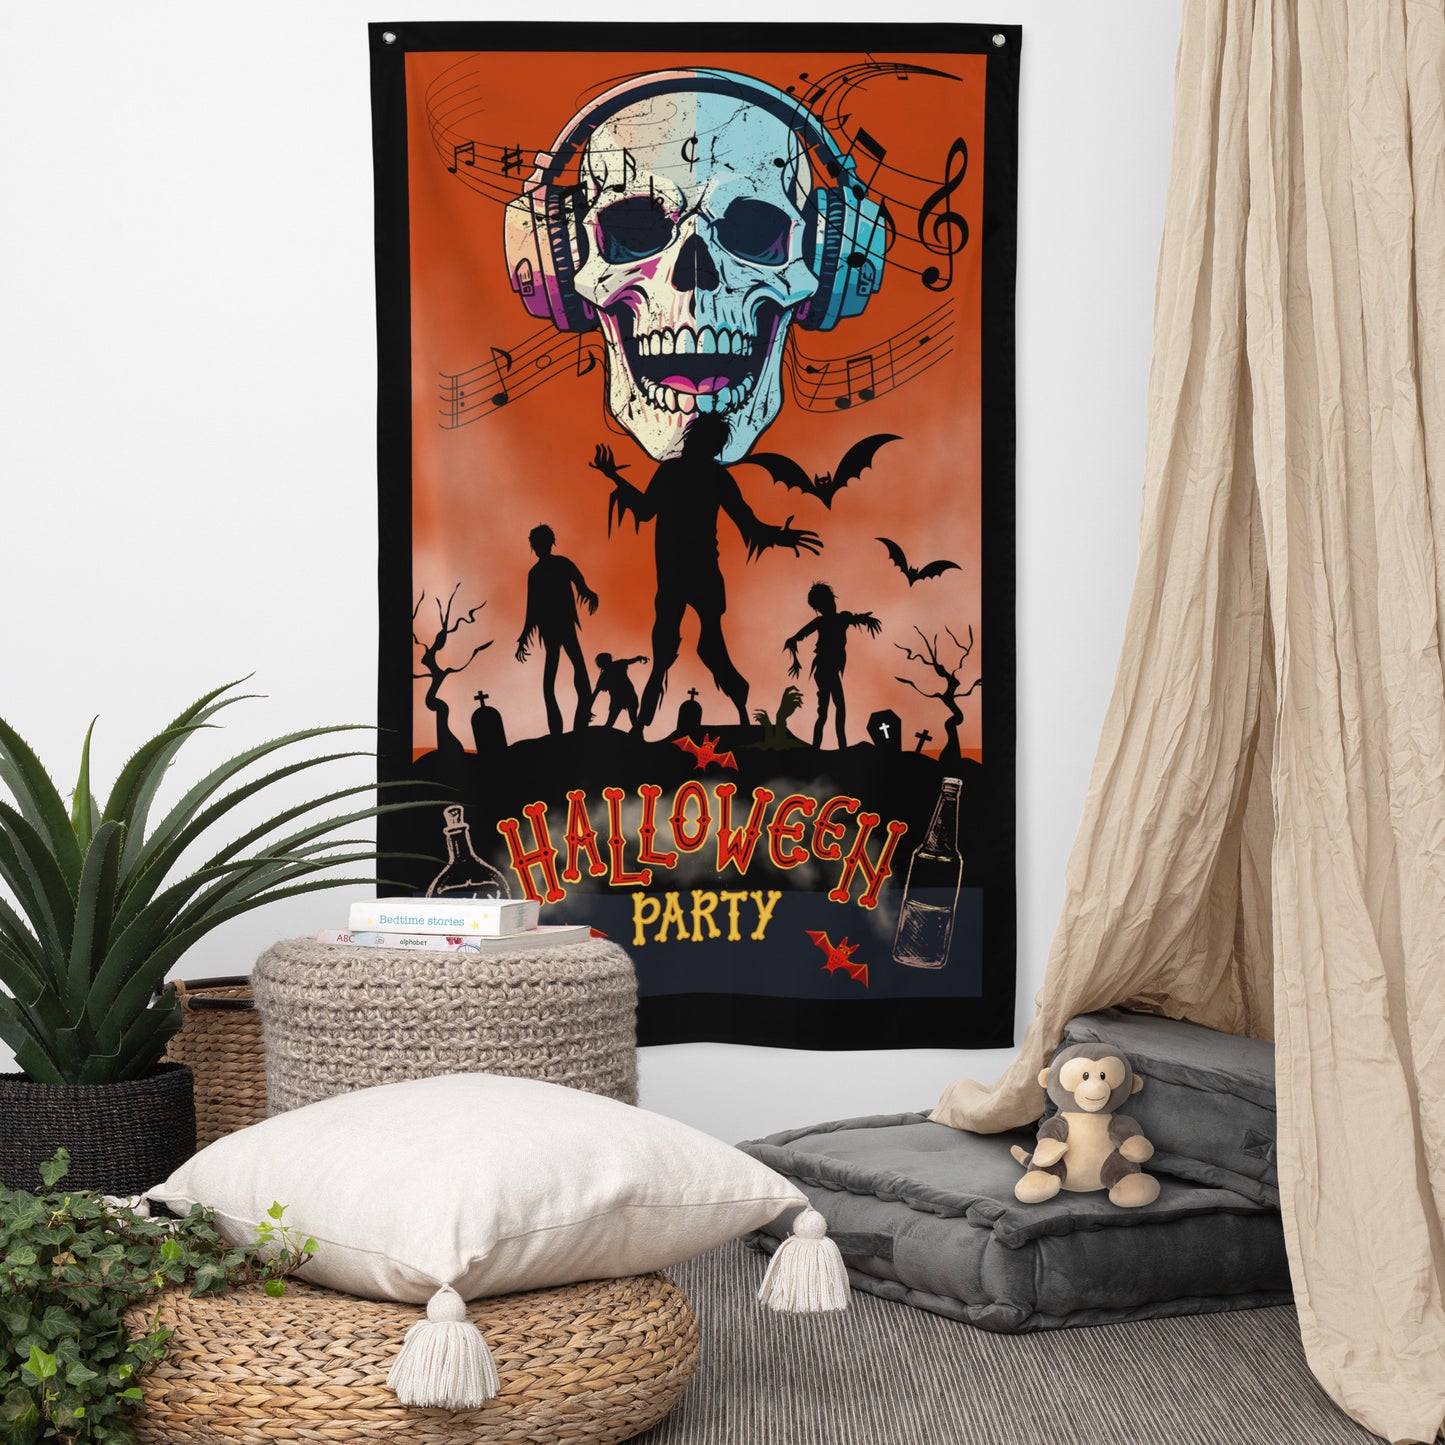 Halloween Decoration Wall Art Flag. Welcome To Halloween Paty, DJ Music Style.